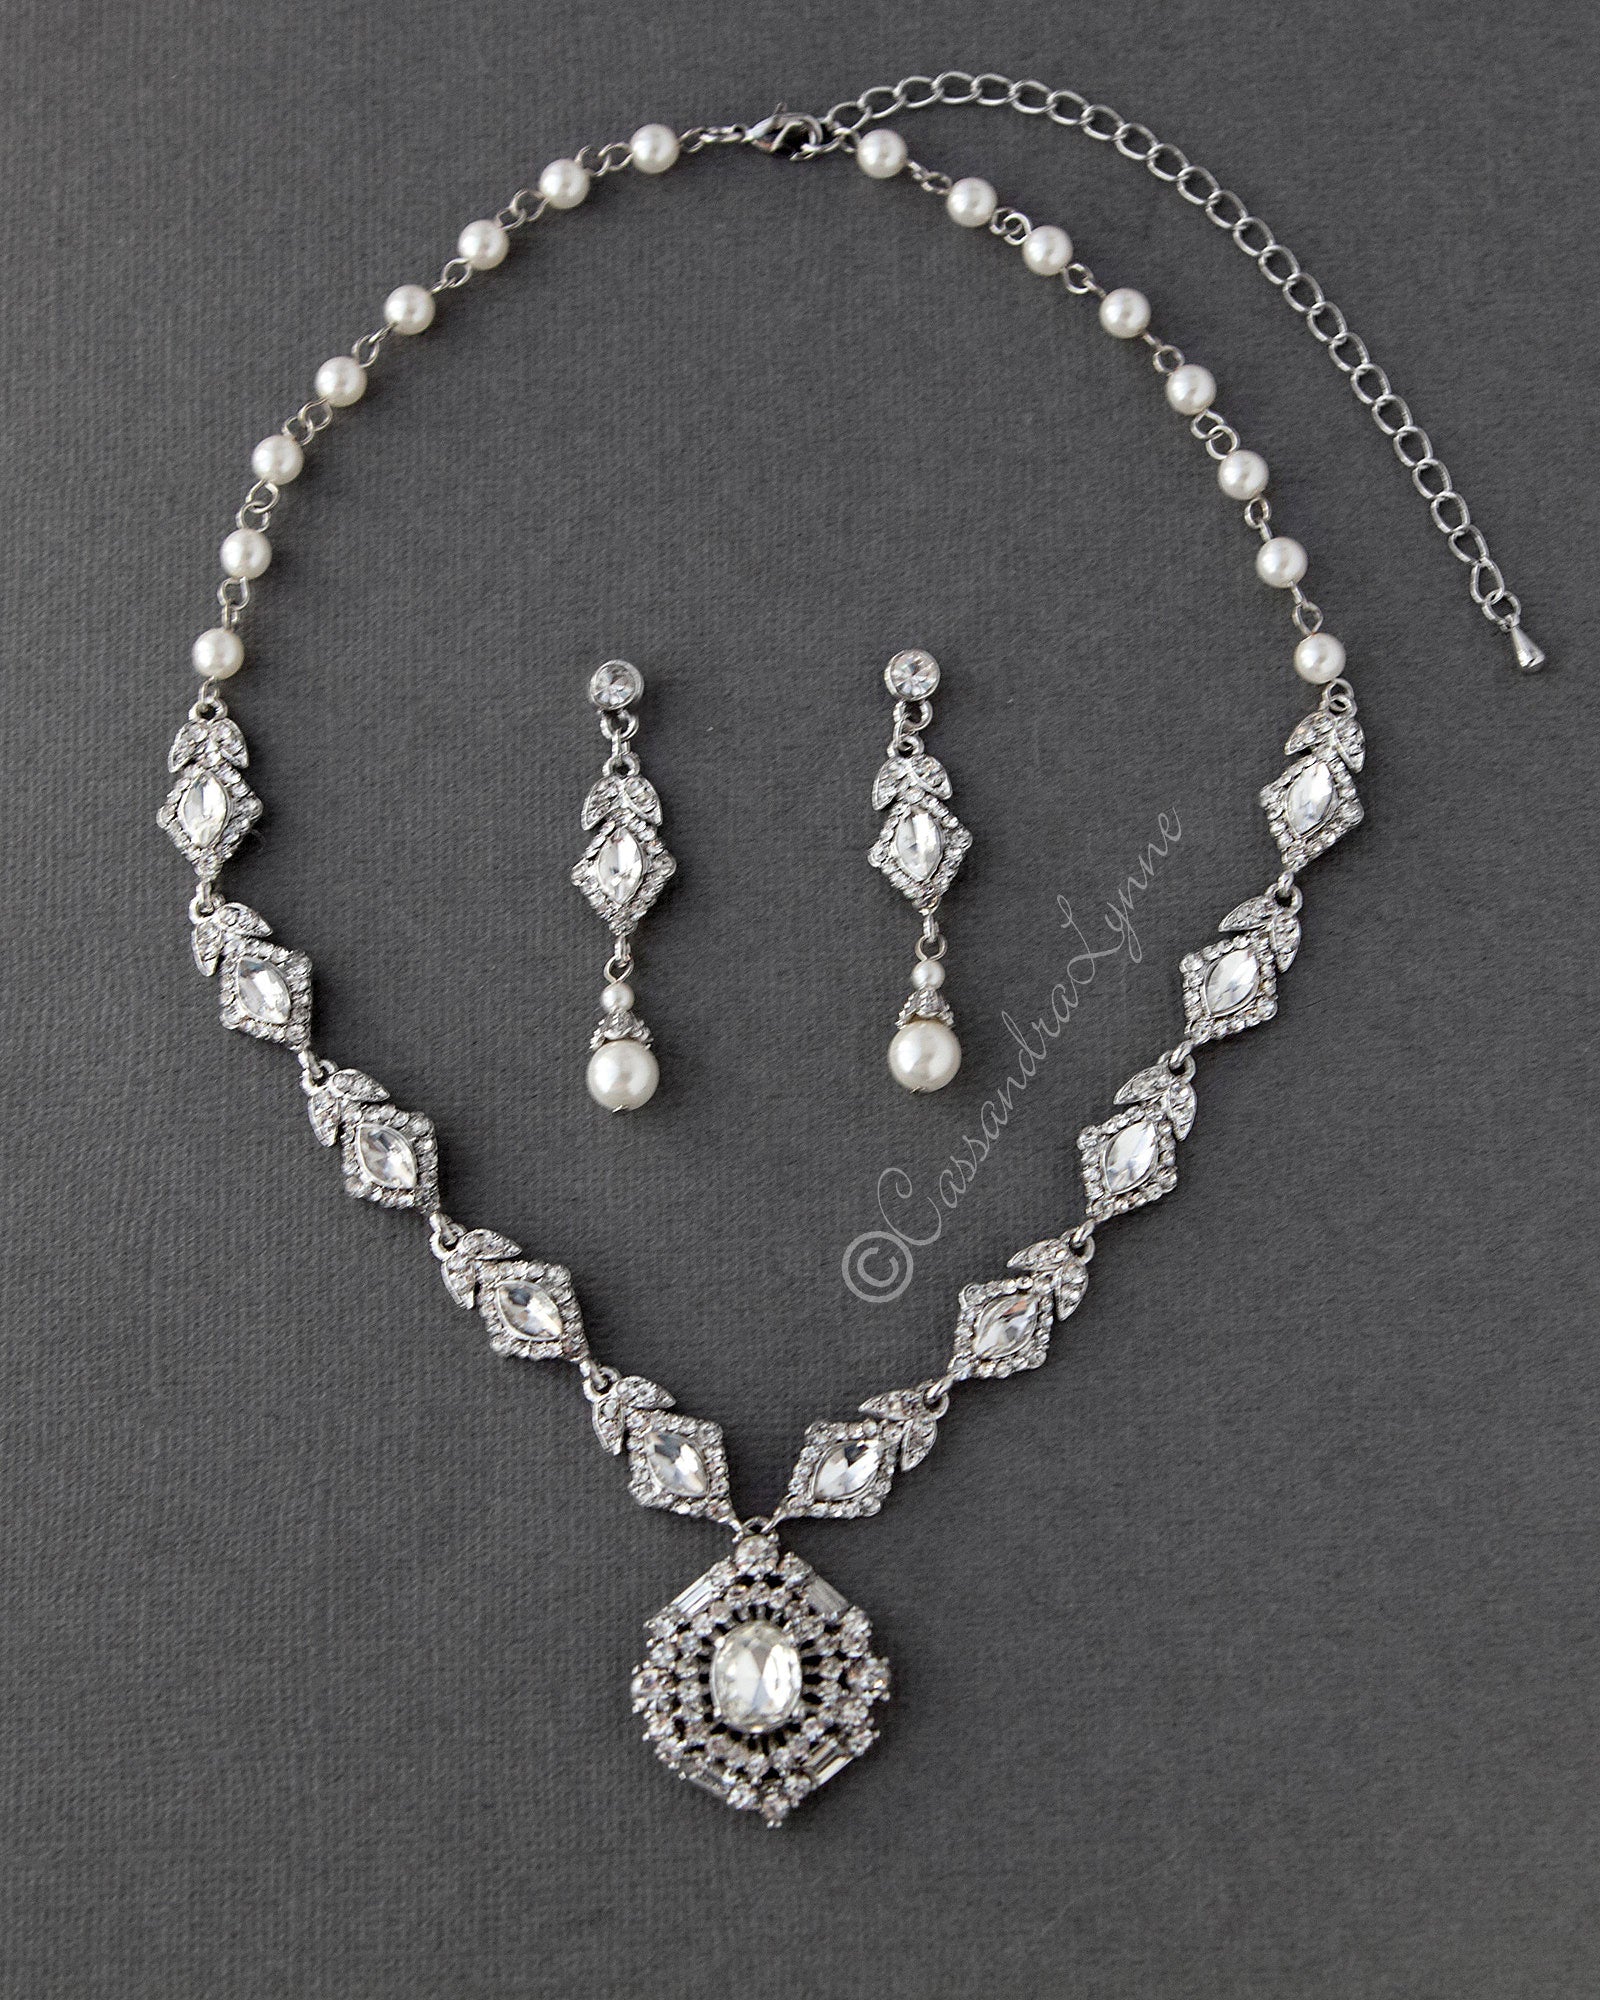 Vintage Wedding Necklace Set of Pearls and Rhinestones - Cassandra Lynne